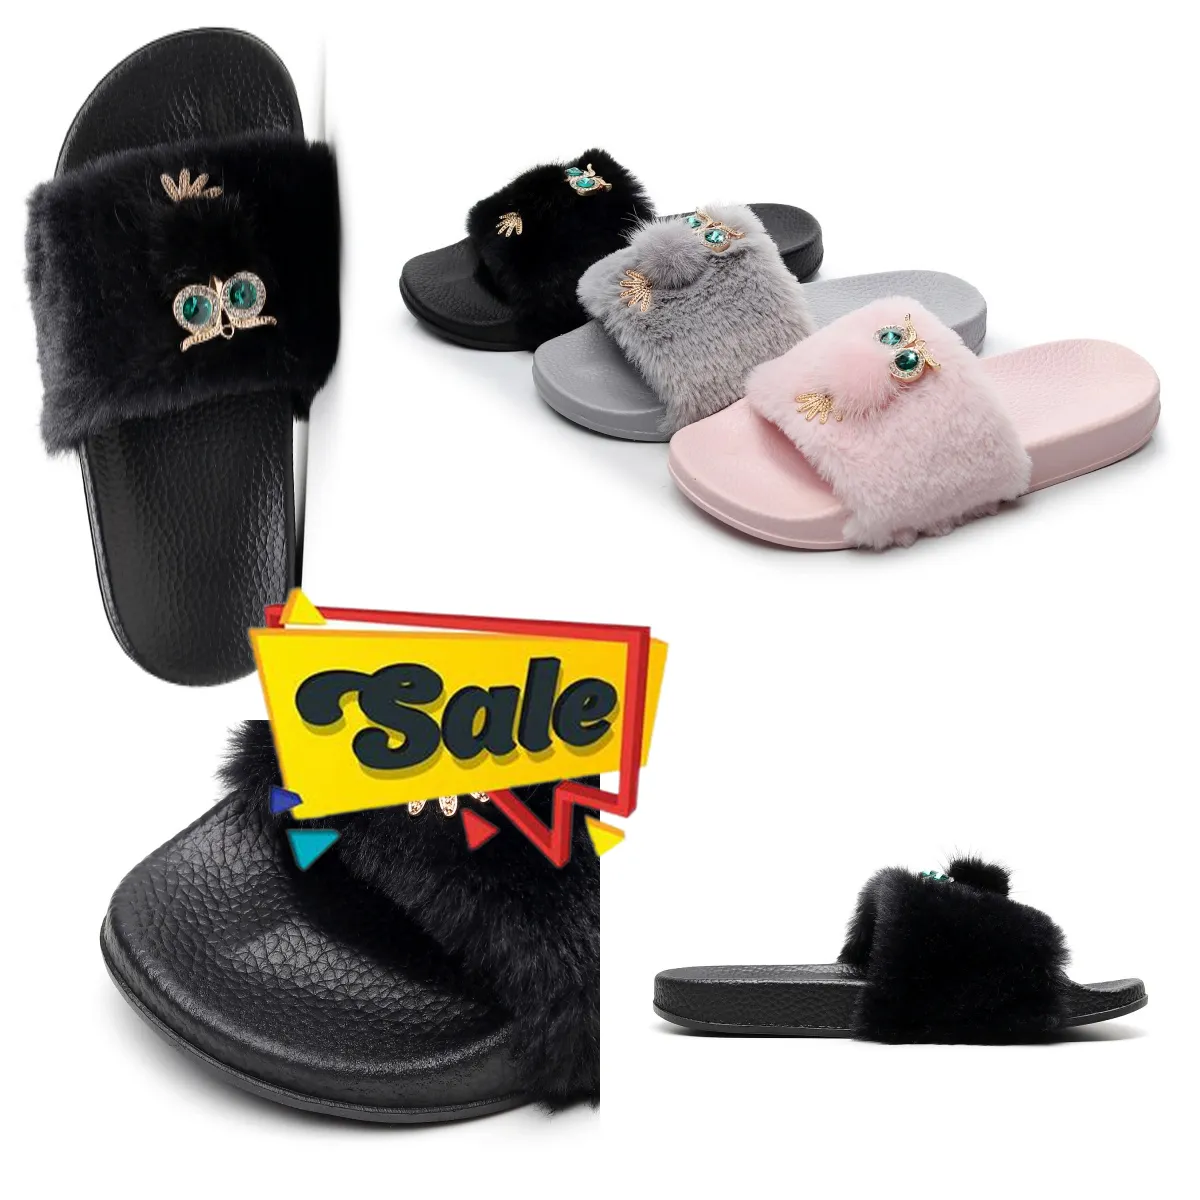 GAI High quality Designer Slippers Sandals Slides Platform Outdoor Fashion For Women Non-slip Leisure Ladies Slipper new style low price size 36-41